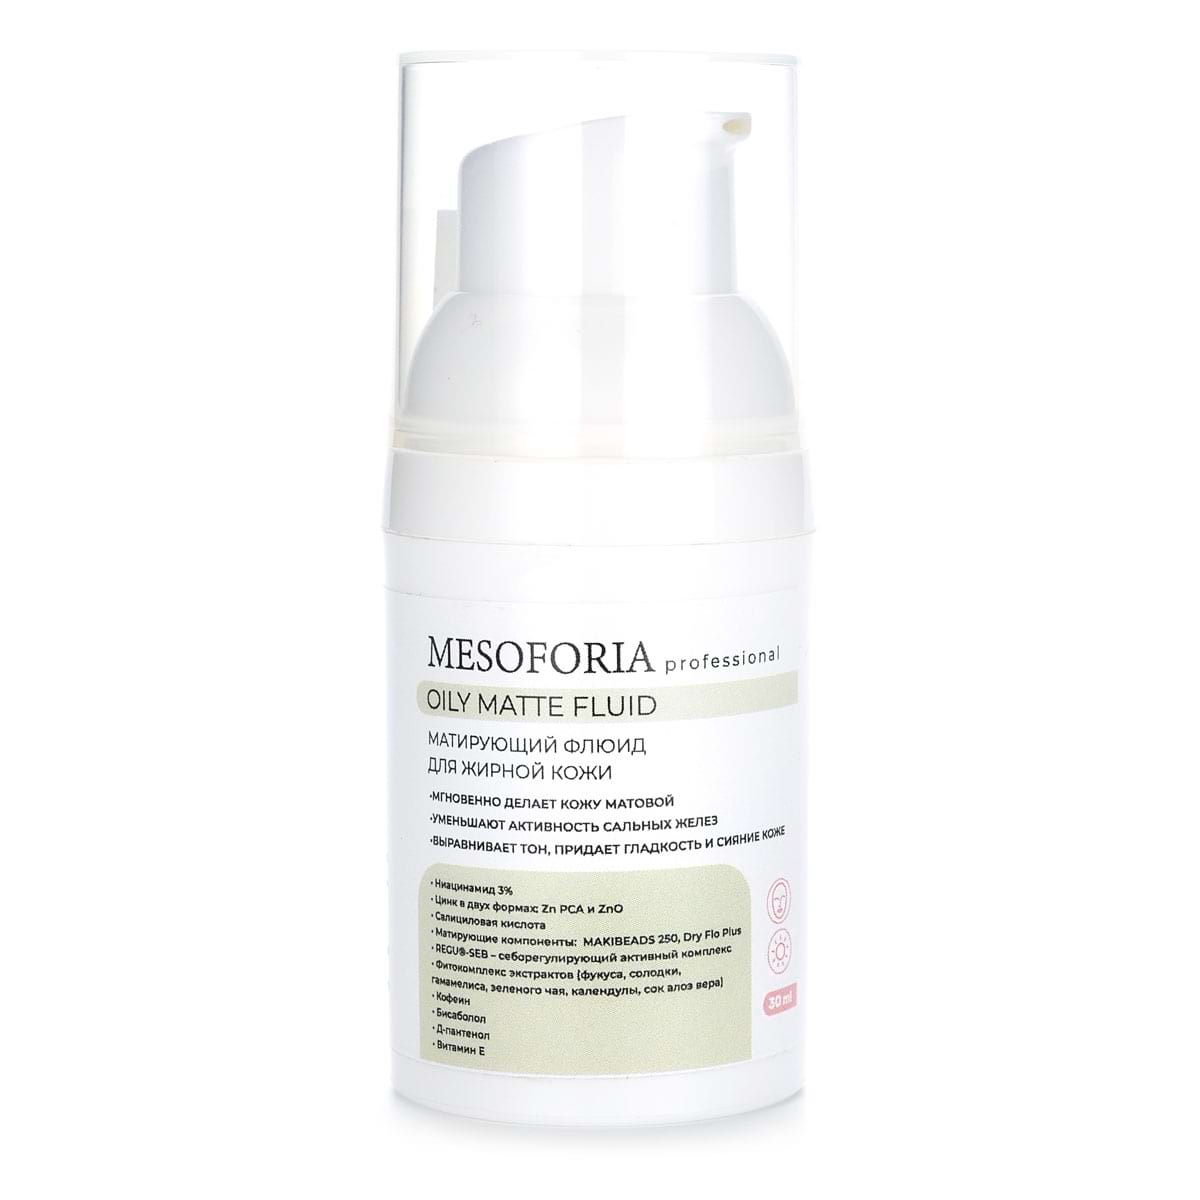 Oily Matte Fluid / Матирующий флюид для жирной кожи, Mesoforia (Мезофория) – 30 мл